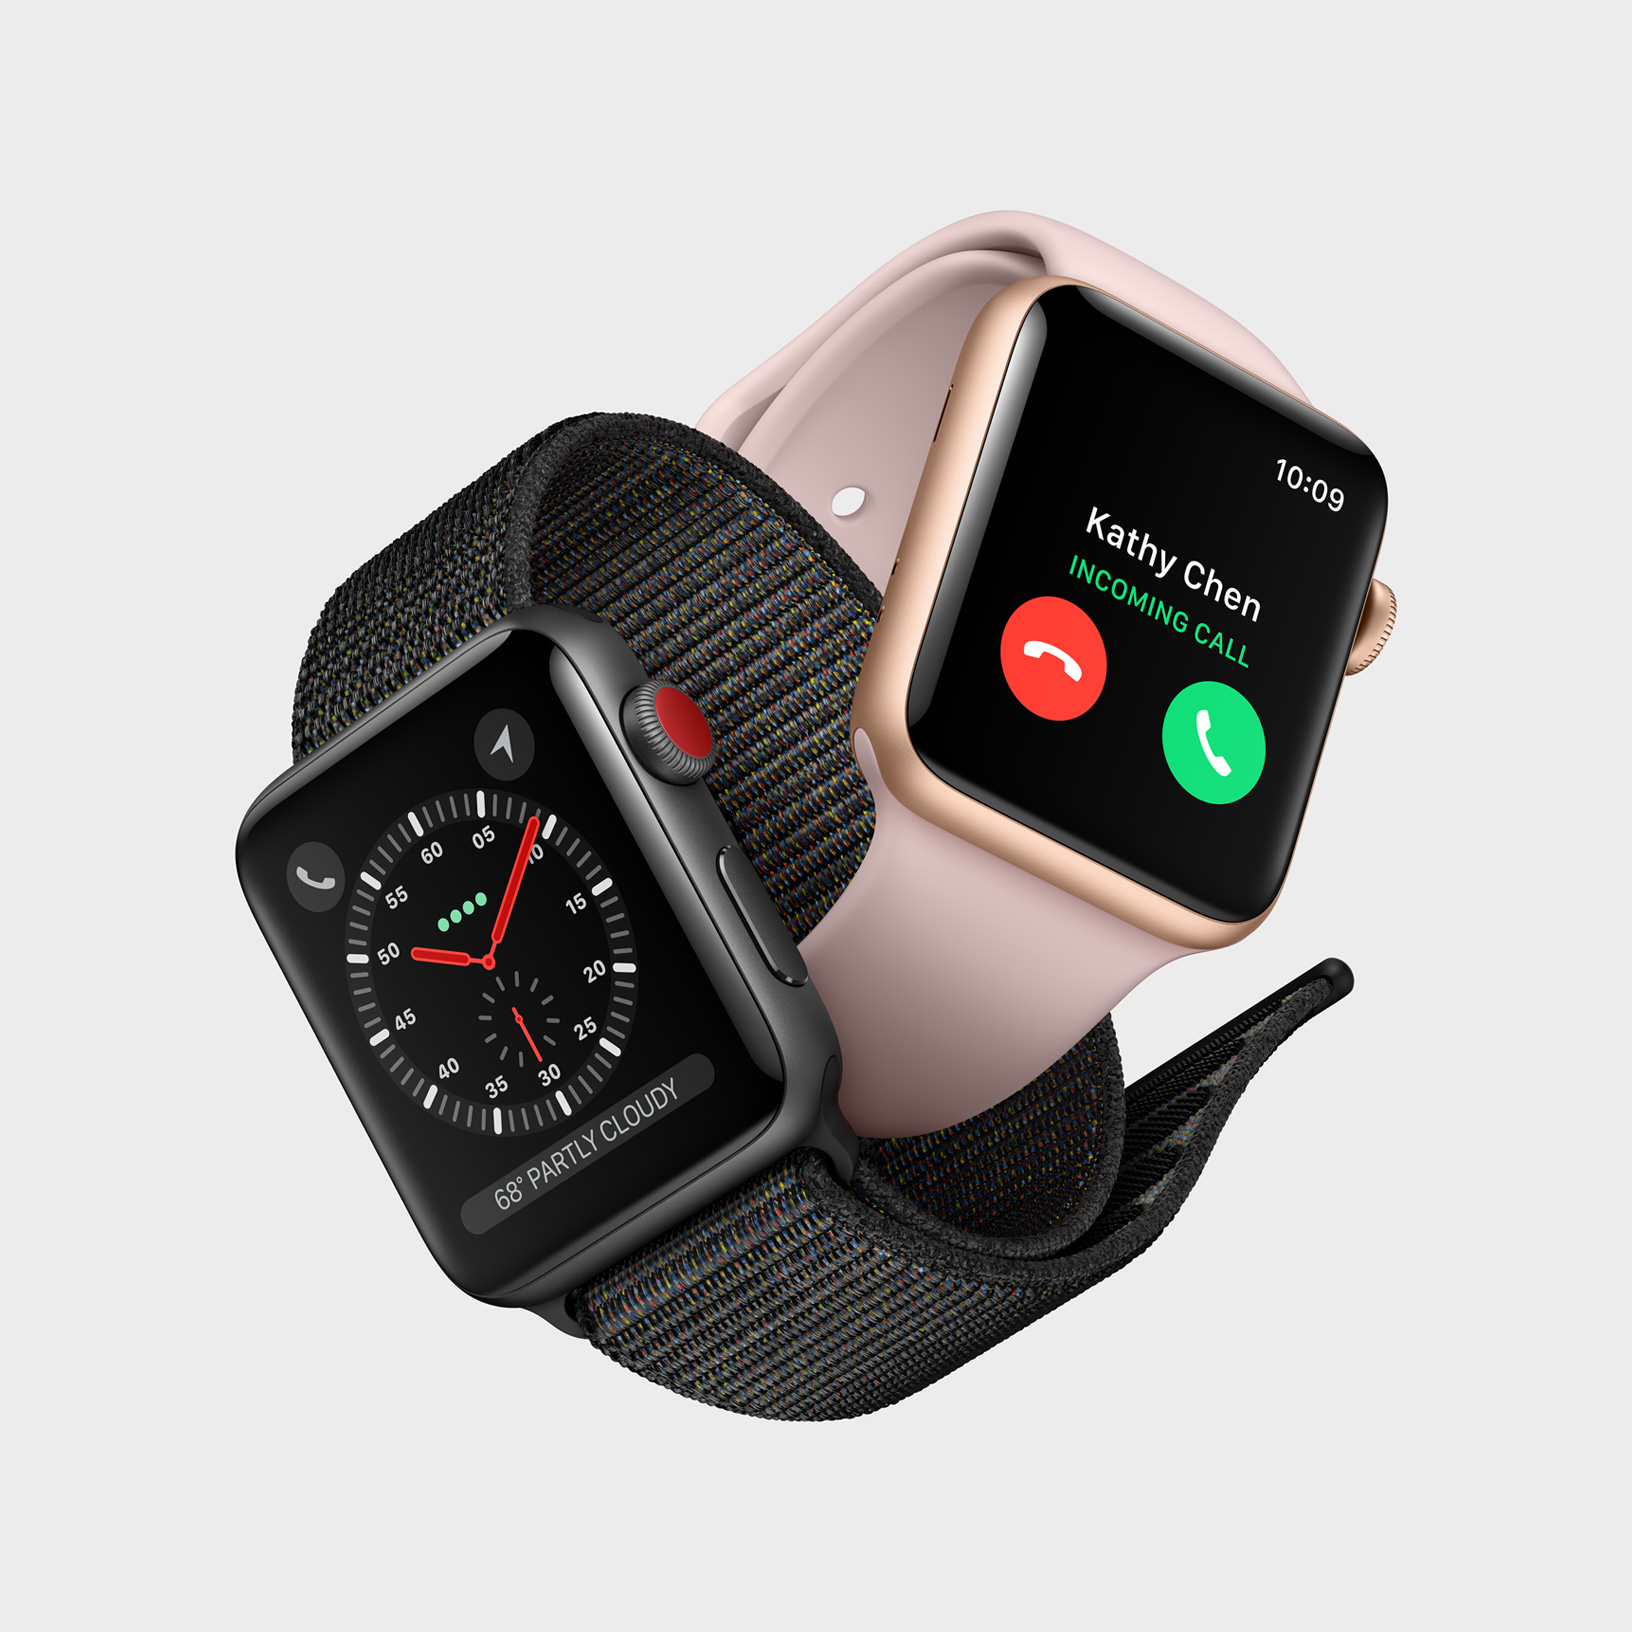 Объявлена российская цена на Apple Watch Series 3